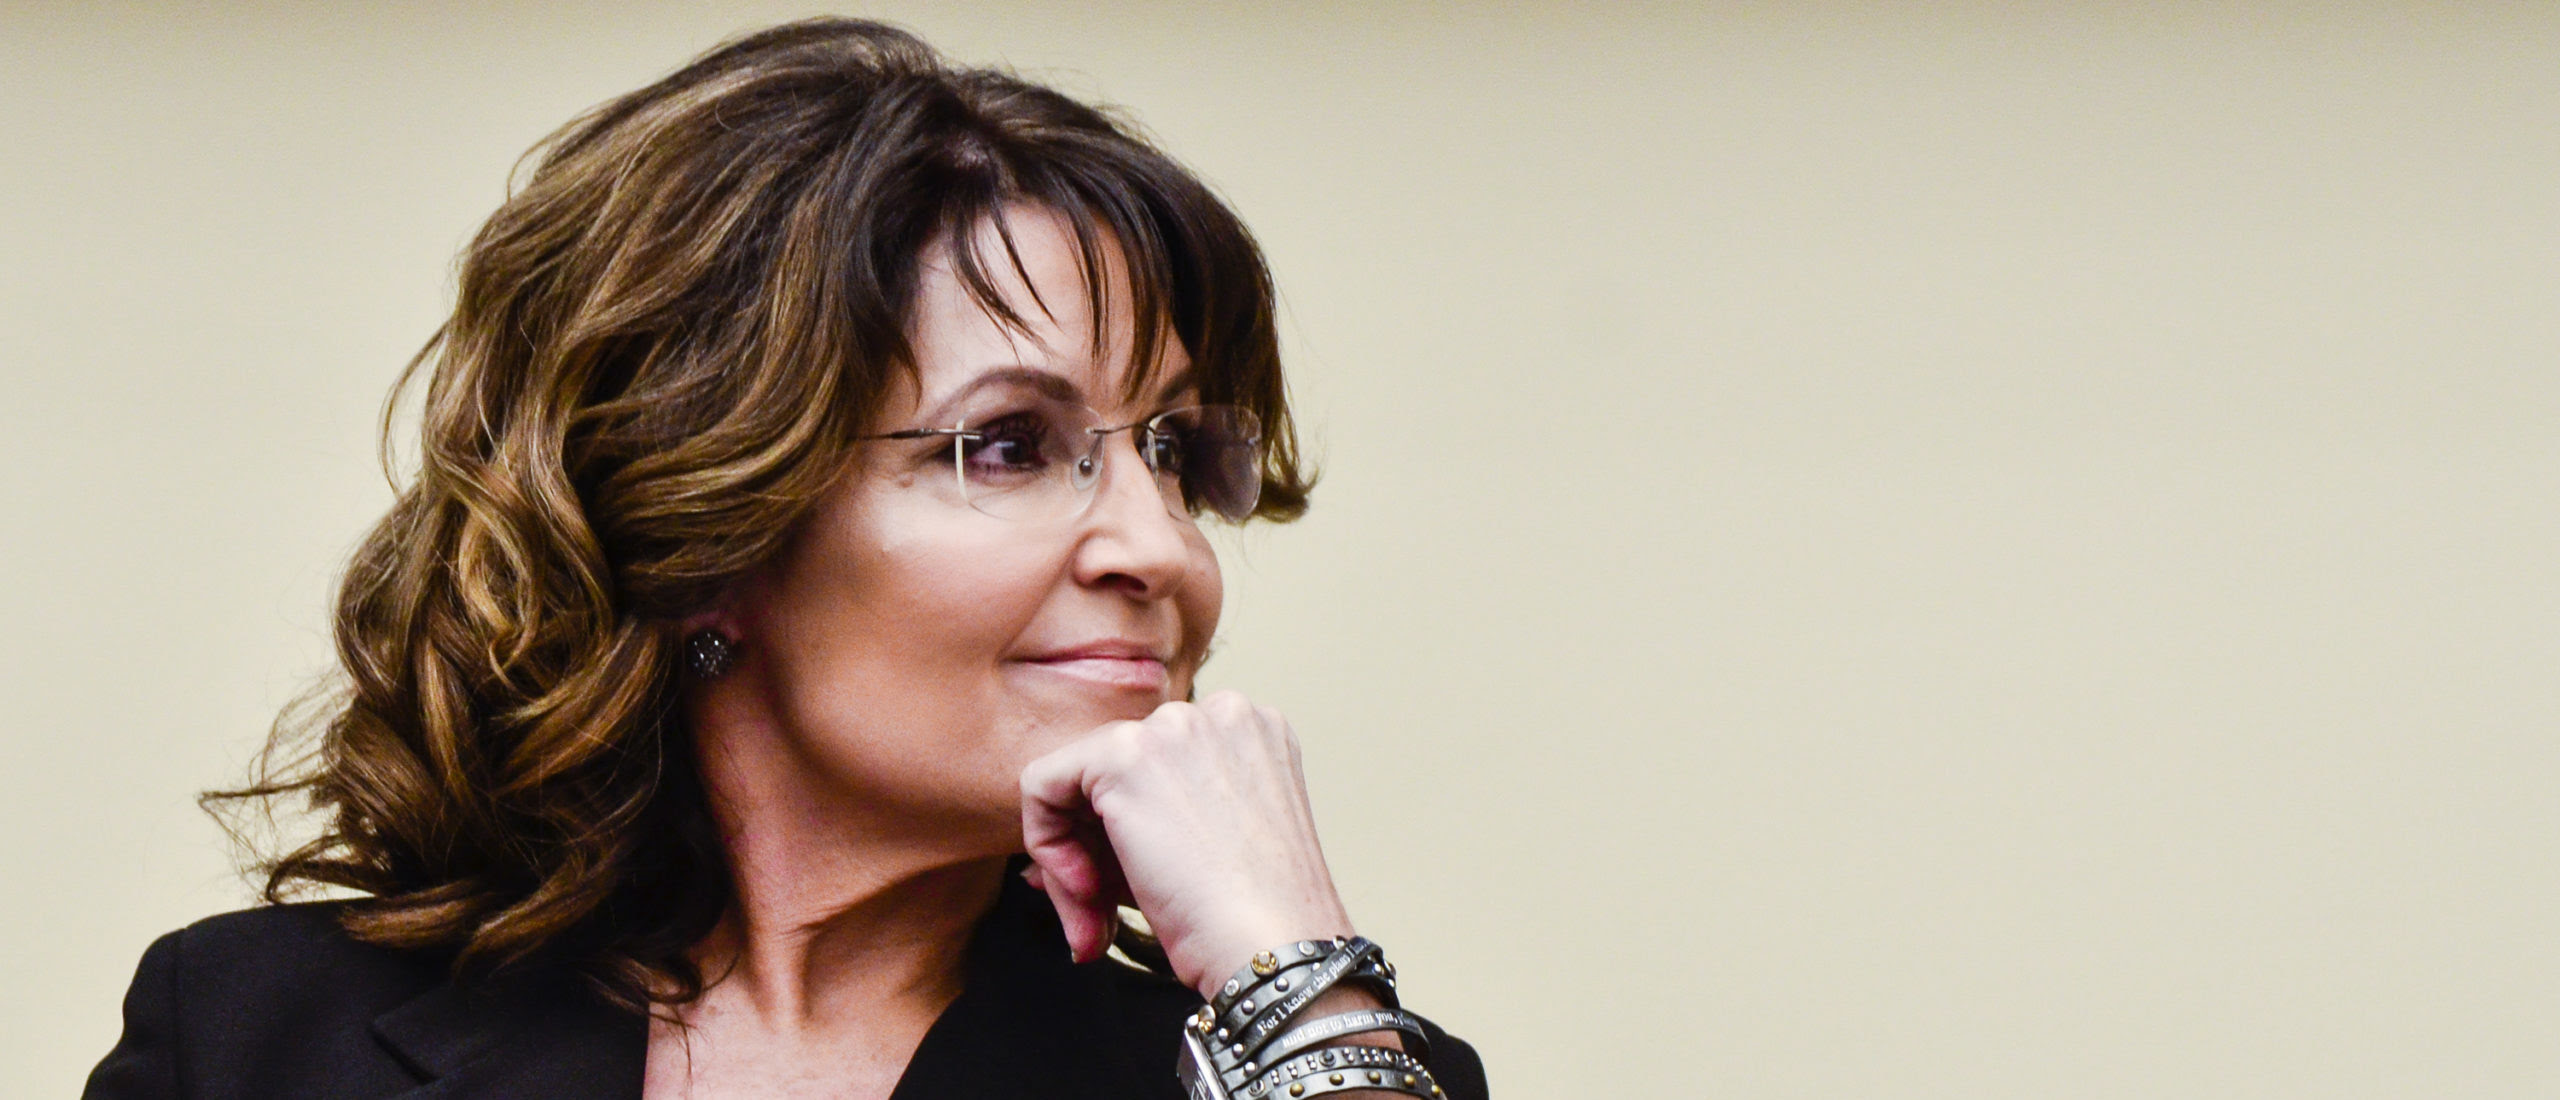 Sarah Palin Loses Alaska House Election To Dem Challenger Mary Peltola